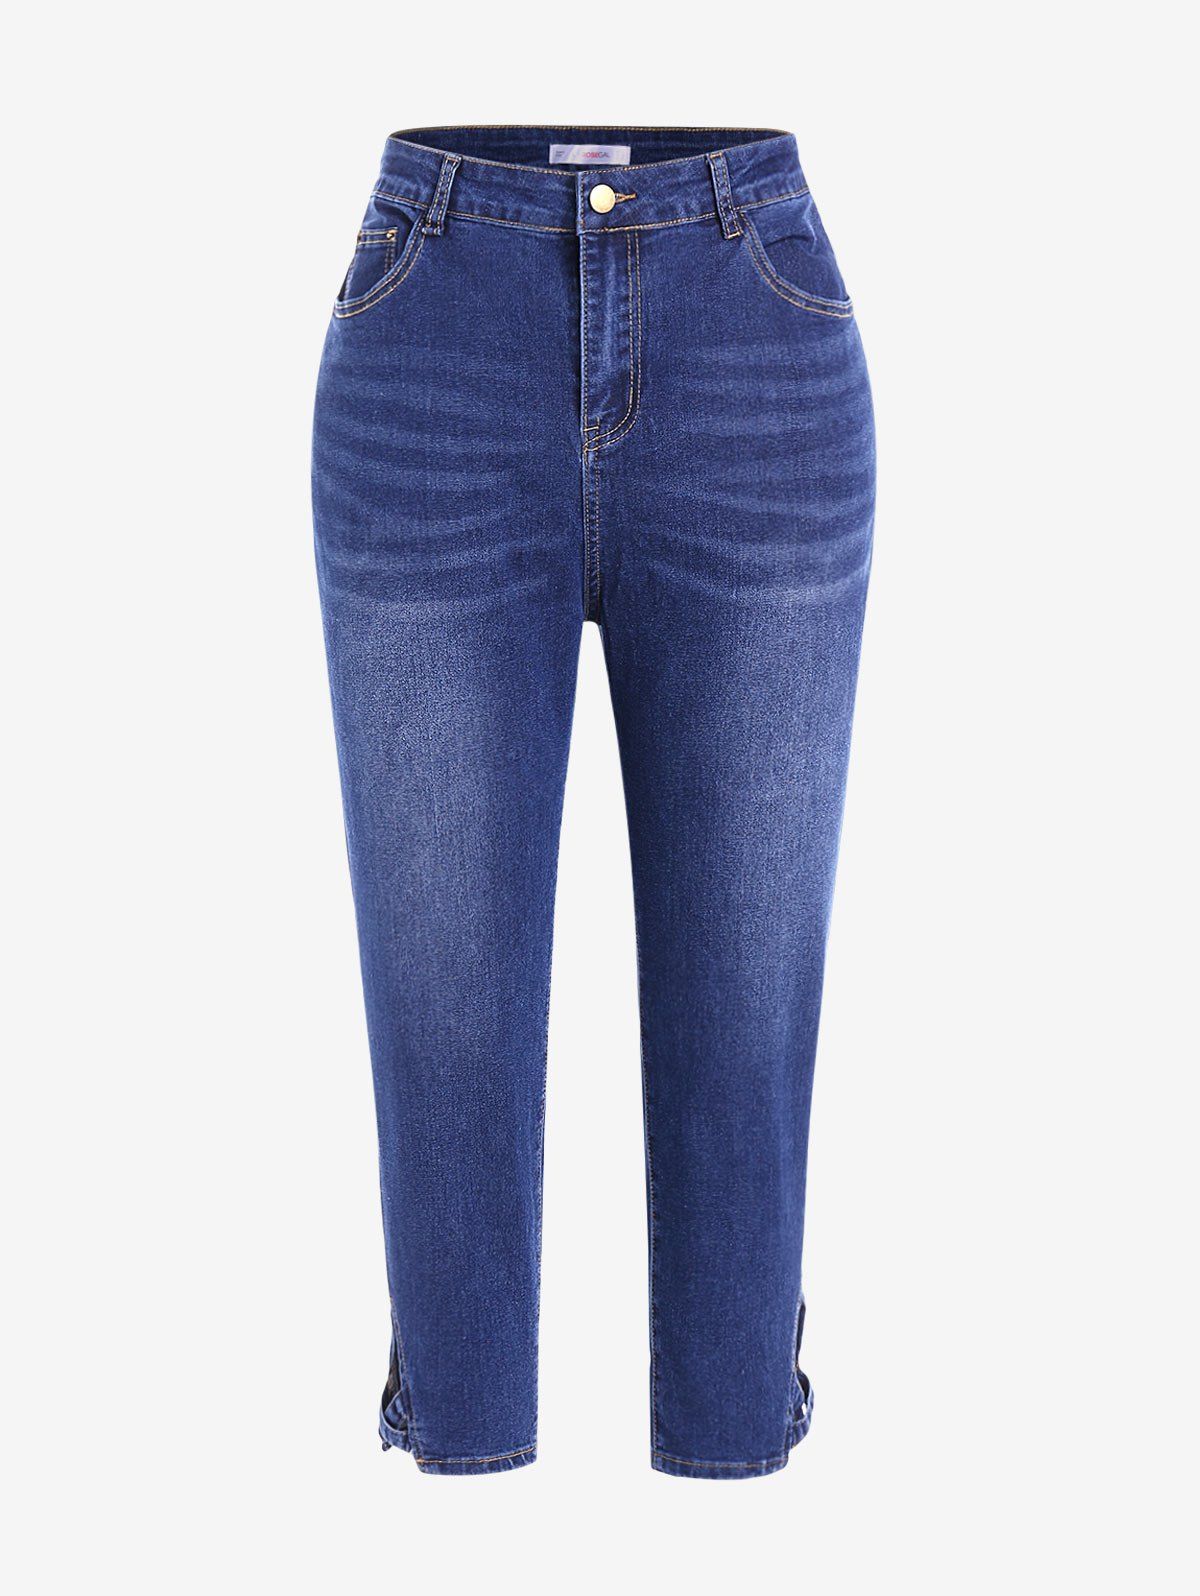 Plus Size Faded Crisscross Ninth Jeans - DEEP BLUE 3X